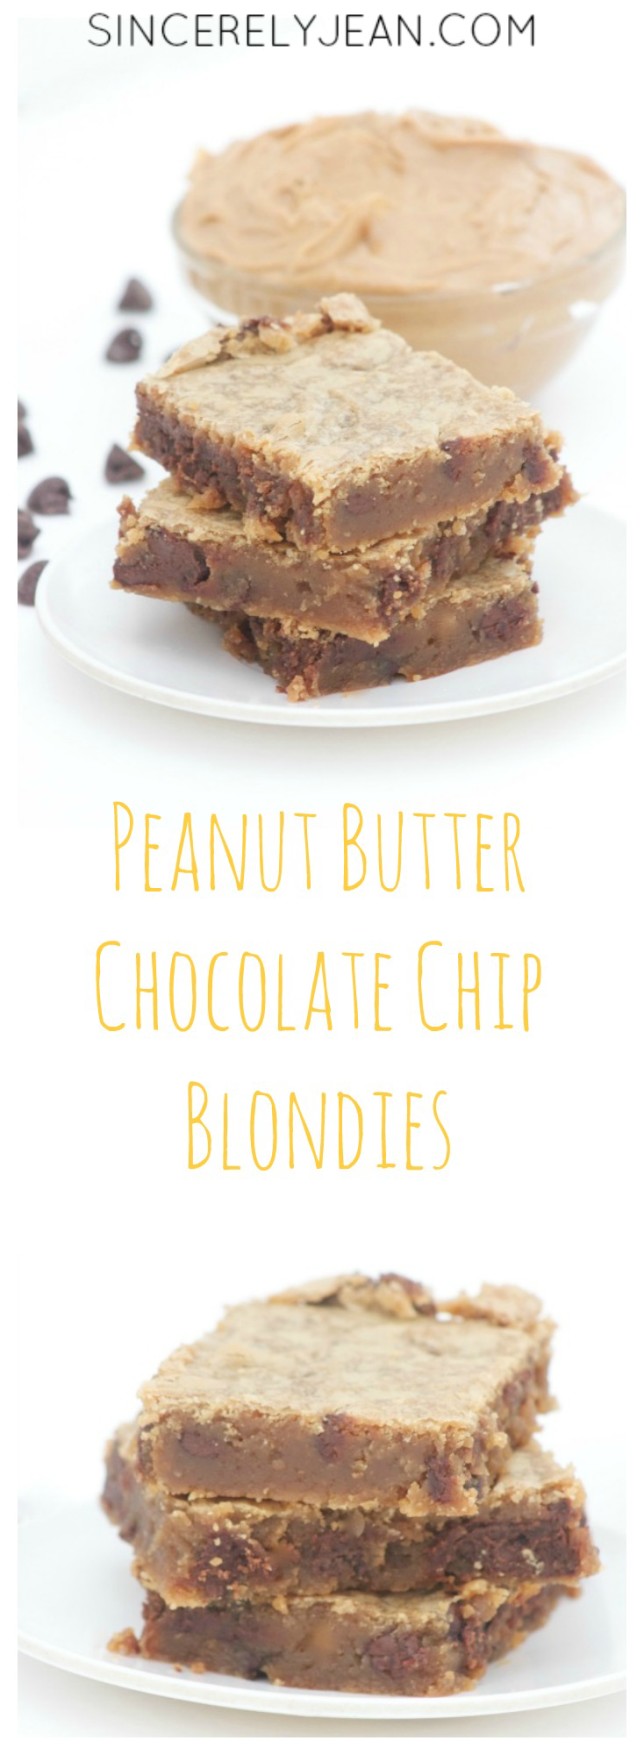 Peanut butter chocolate chip blondies